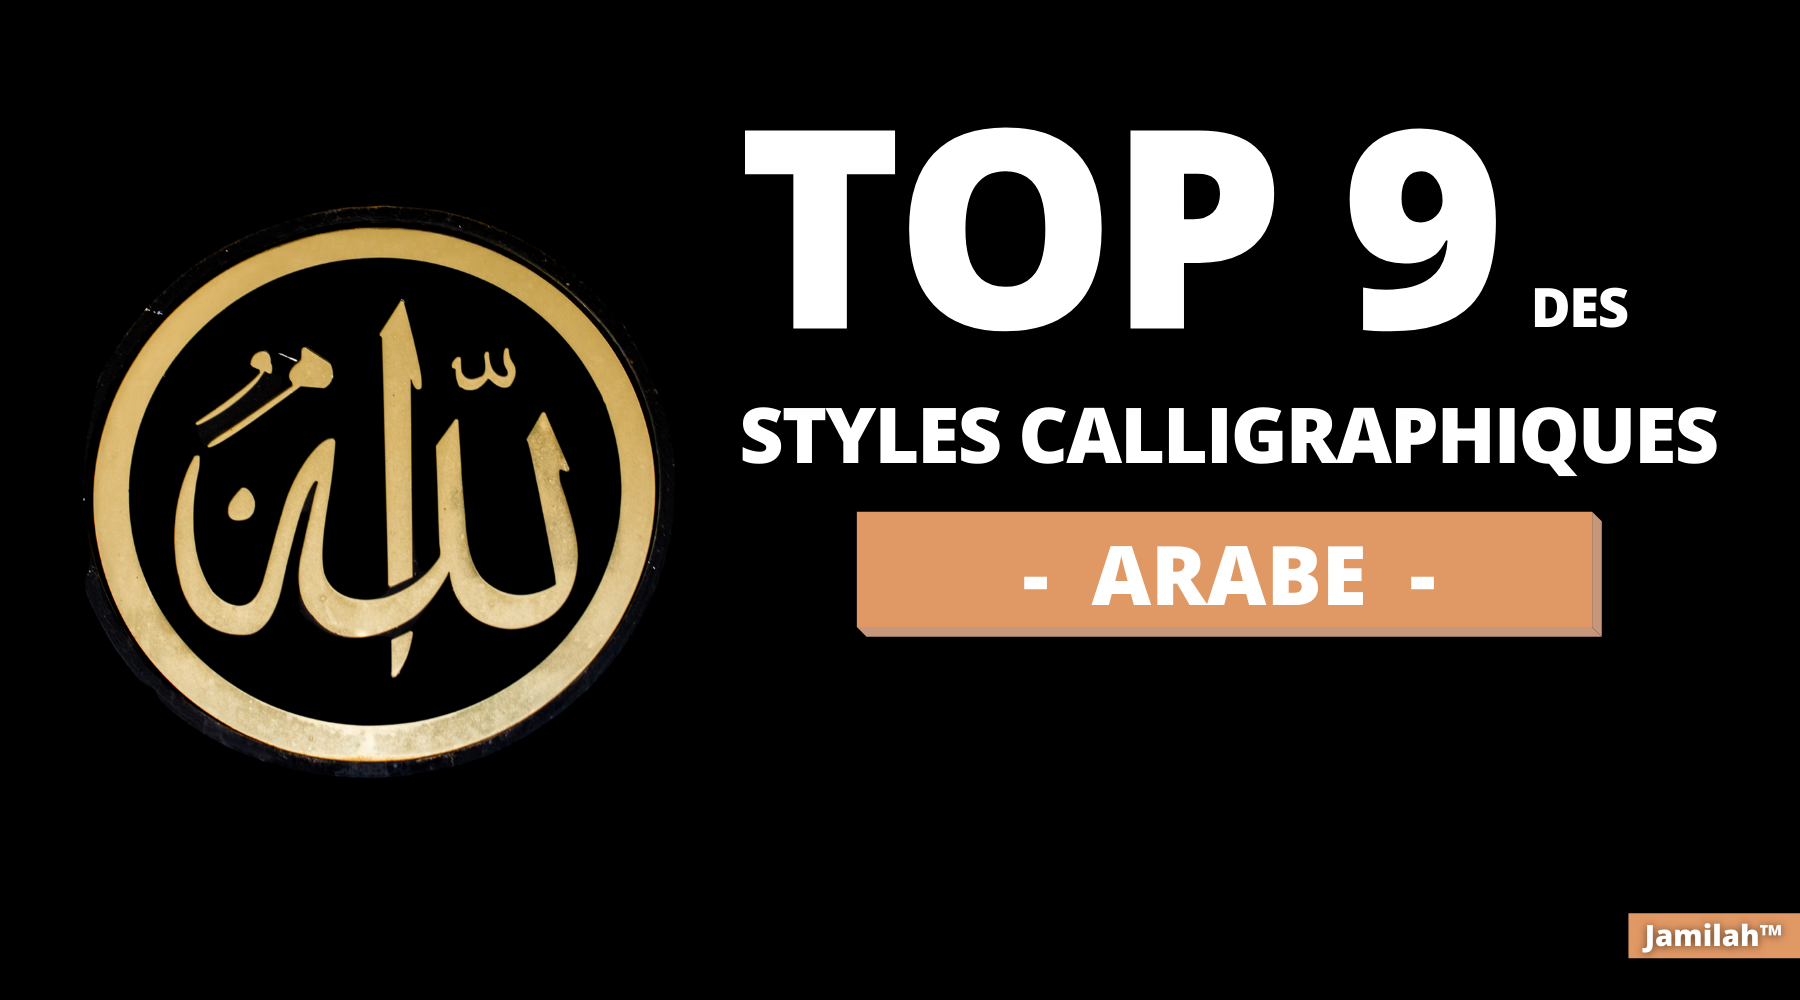 Top 9 des styles de calligraphie arabe-Jamilah™